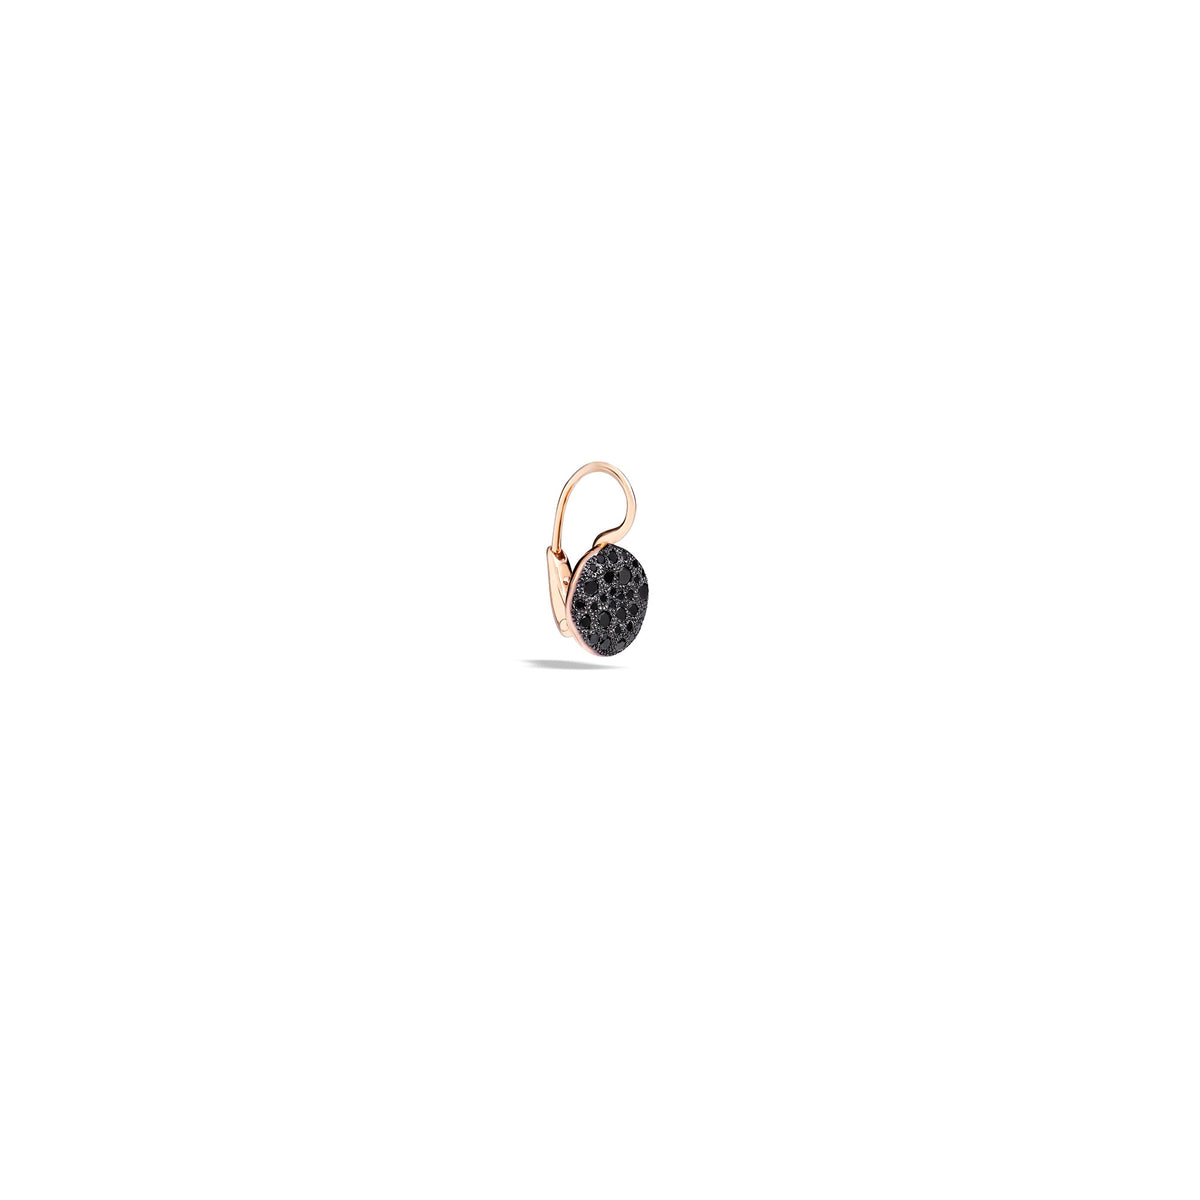 Sabbia Earrings in 18k Rose Gold with Black Diamonds - Orsini Jewellers NZ